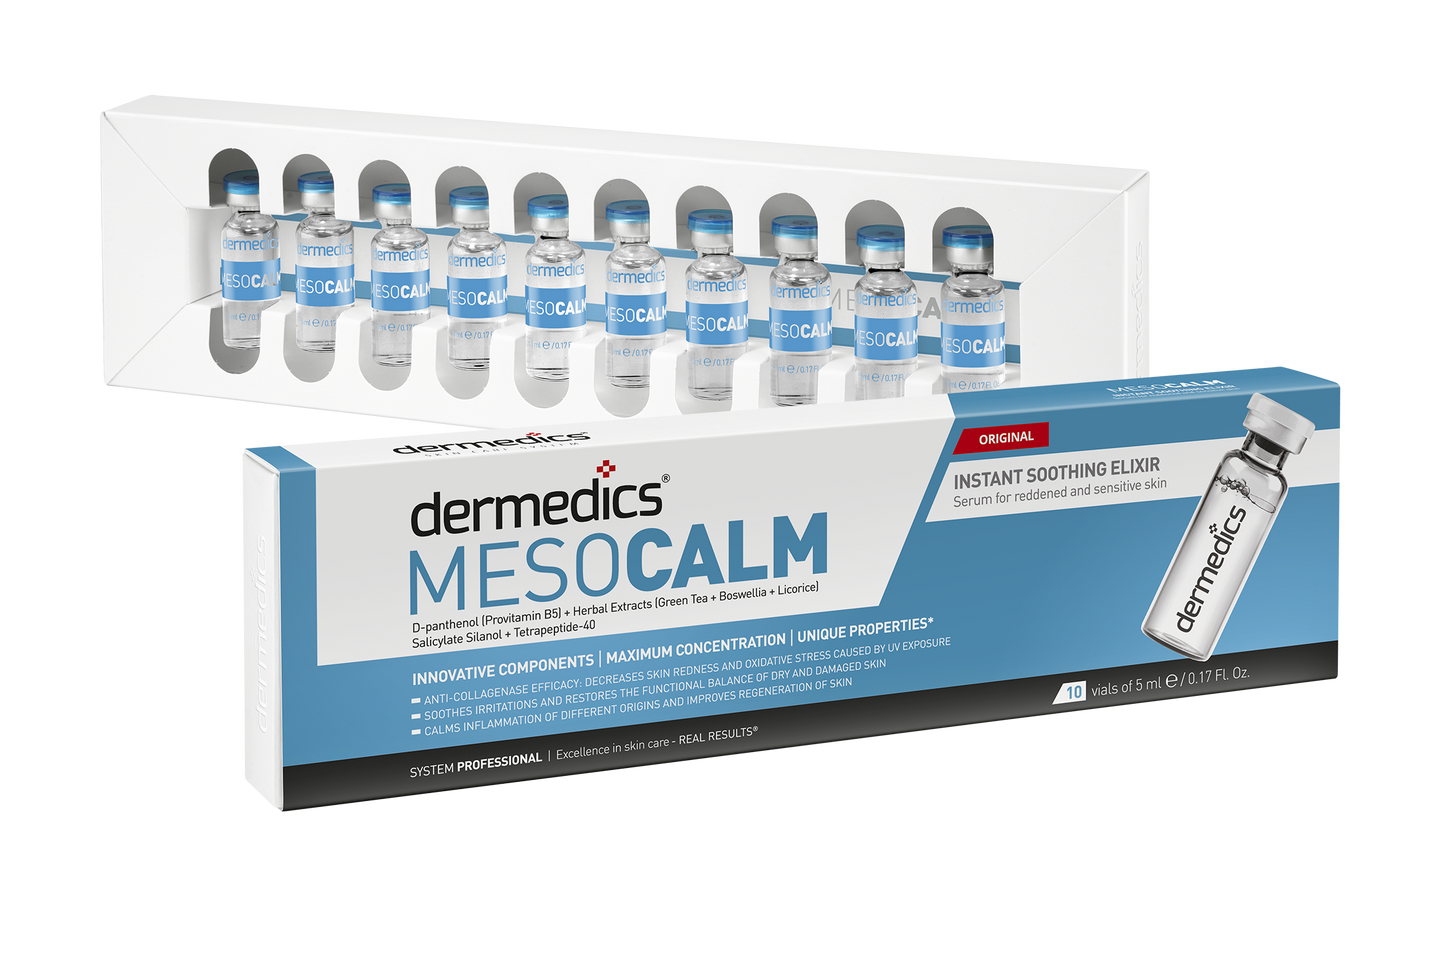 Dermedics Professional MESOCALM Instant Soothing Elixir